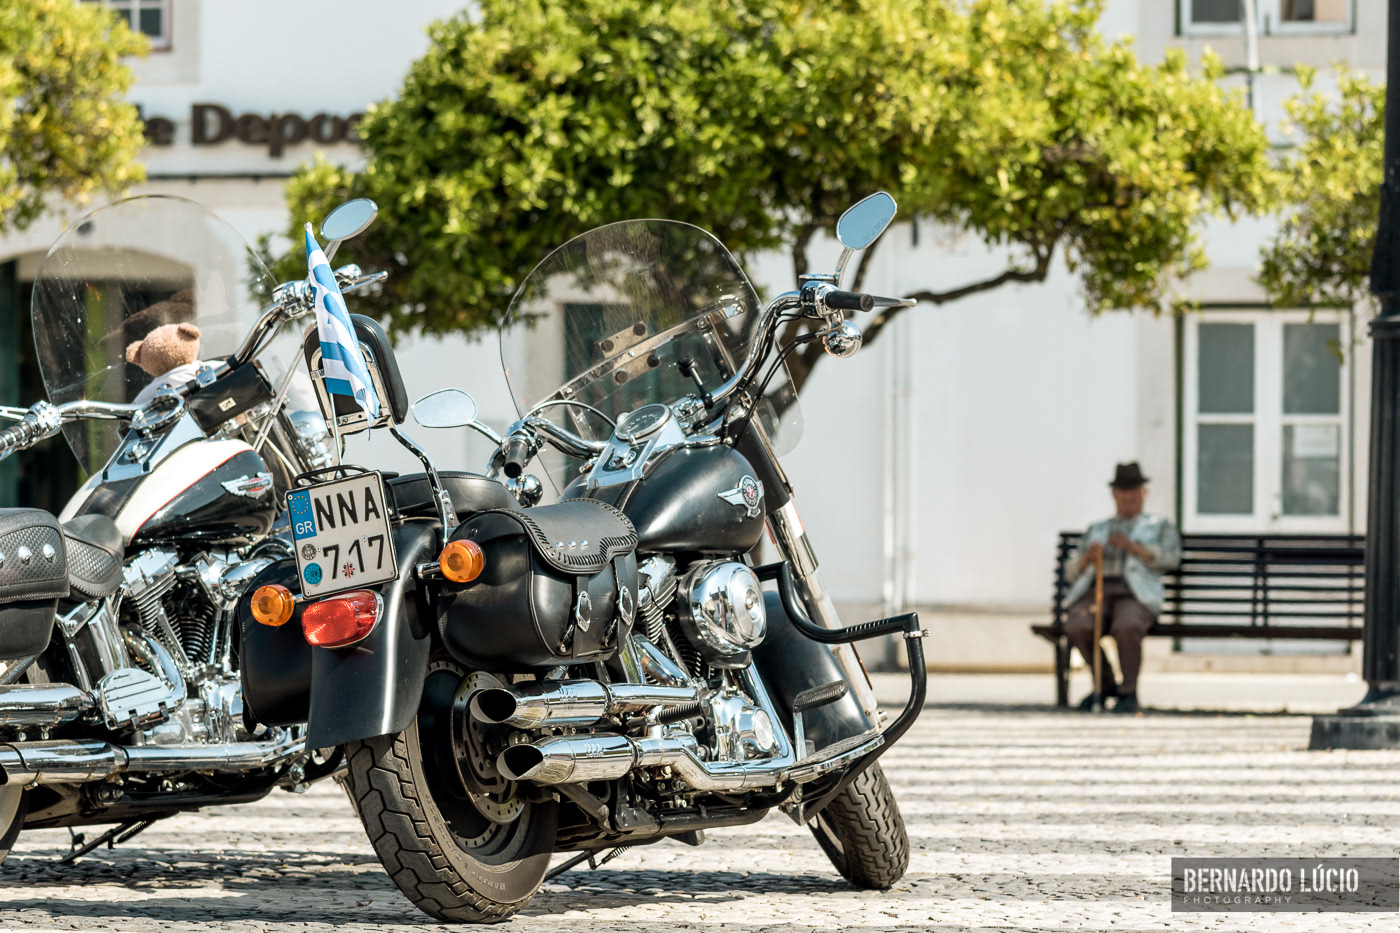 Harley Davidson meeting Algarve motorcycles motorcycles photography  Event Photographer motorcycle event